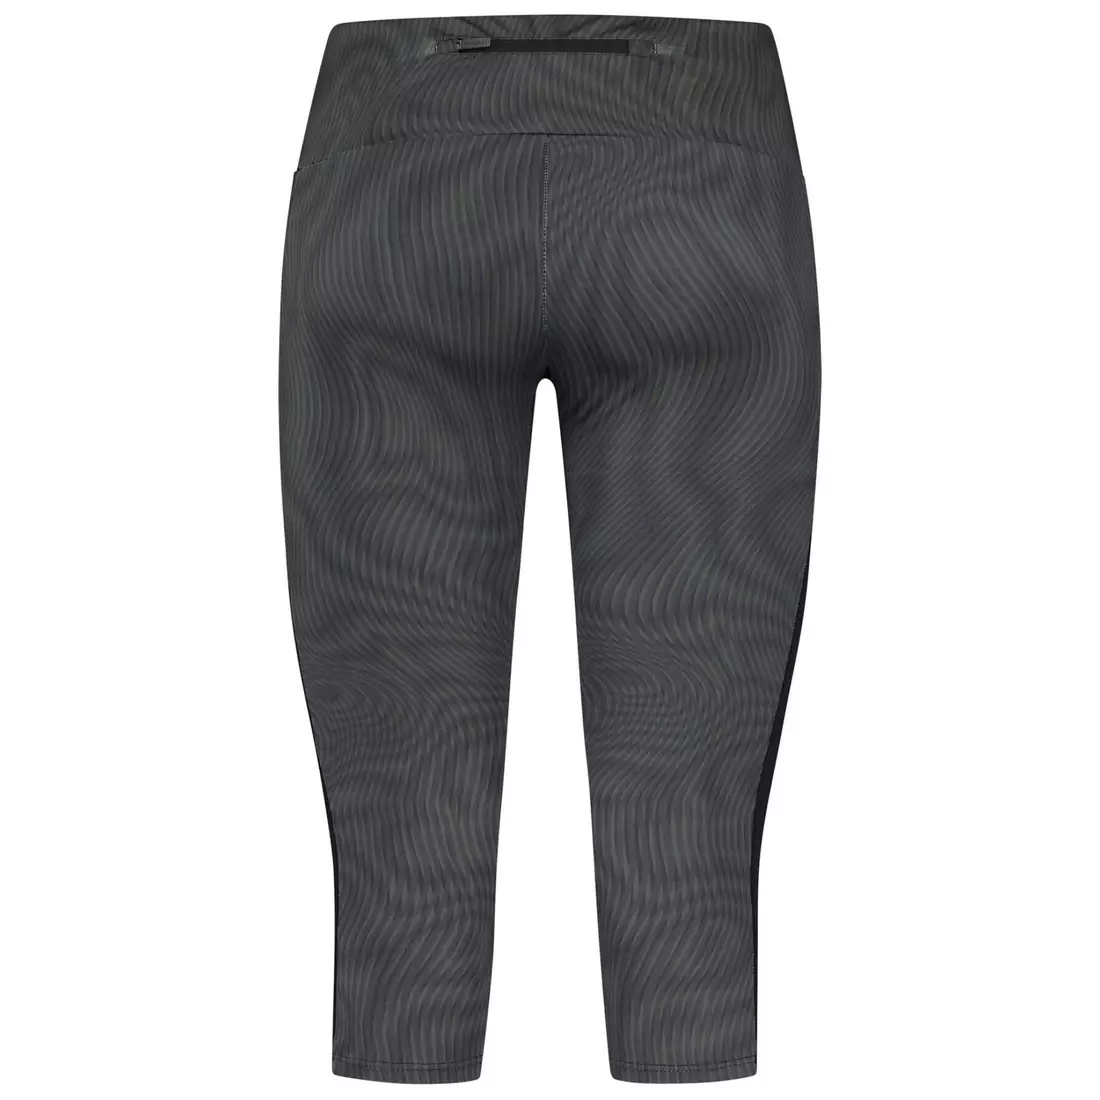 Rogelli KYA women's 3/4 running shorts, khaki-grey